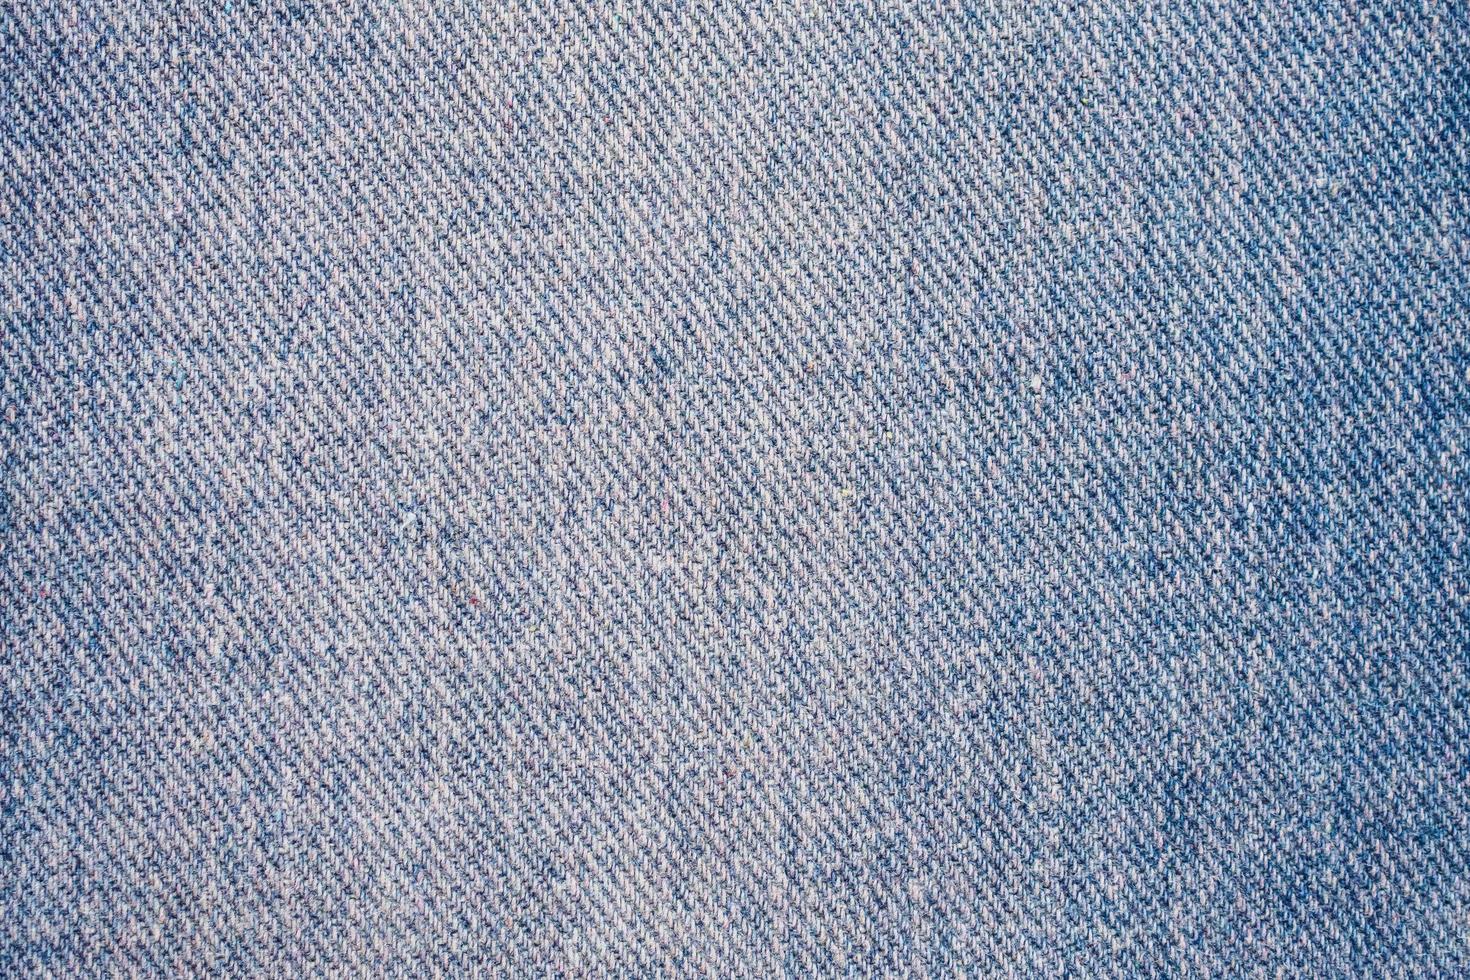 Denim jeans texture pattern background 12602433 Stock Photo at Vecteezy